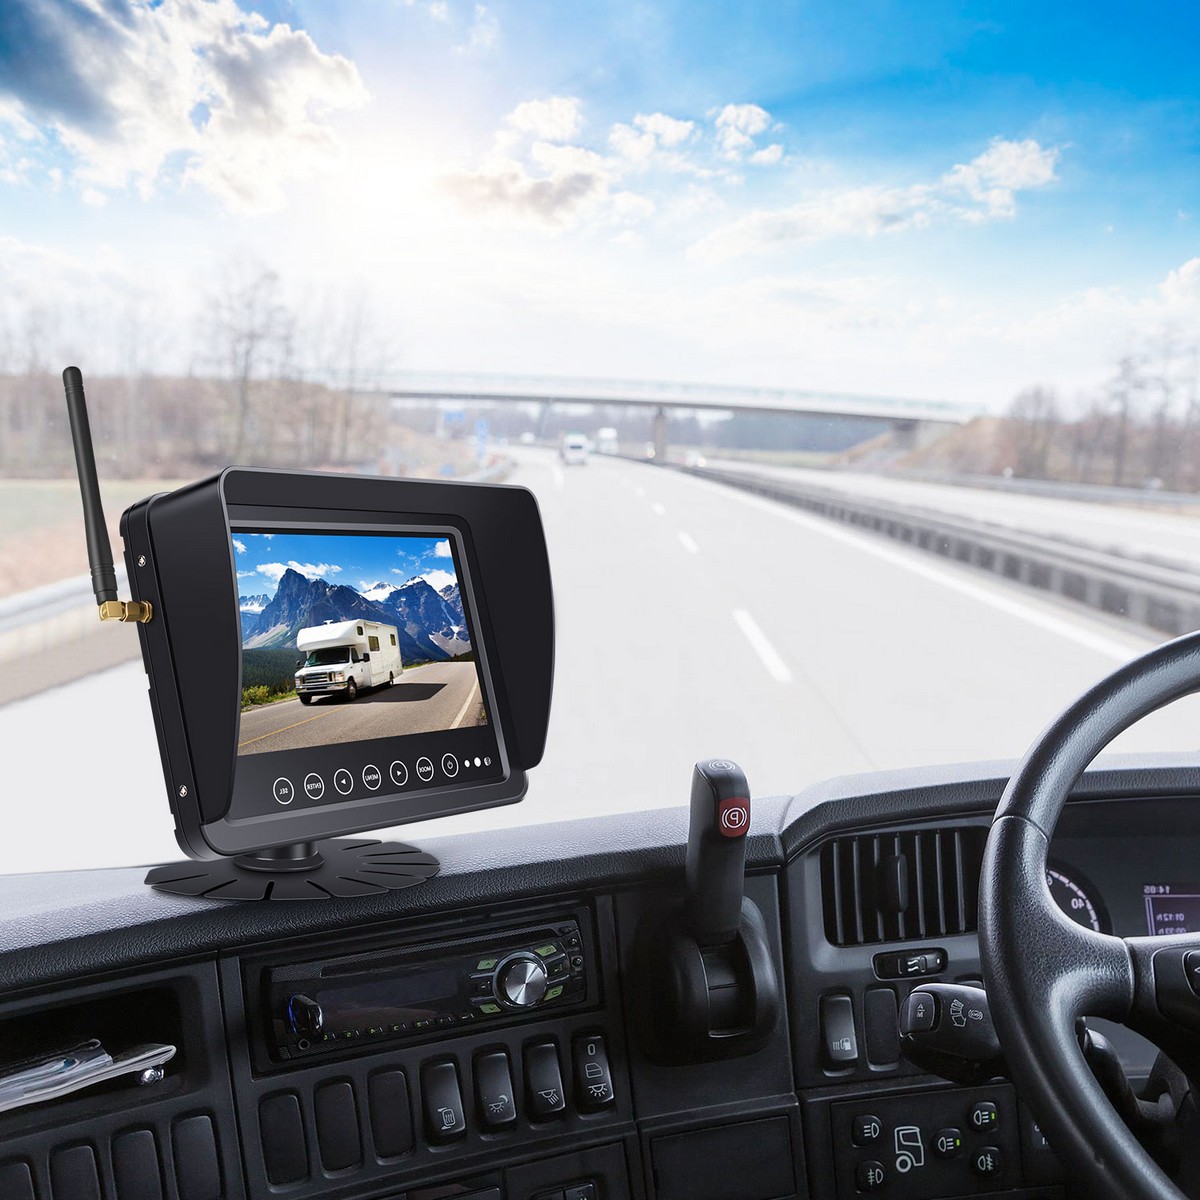 durable waterresist car monitor with cameras